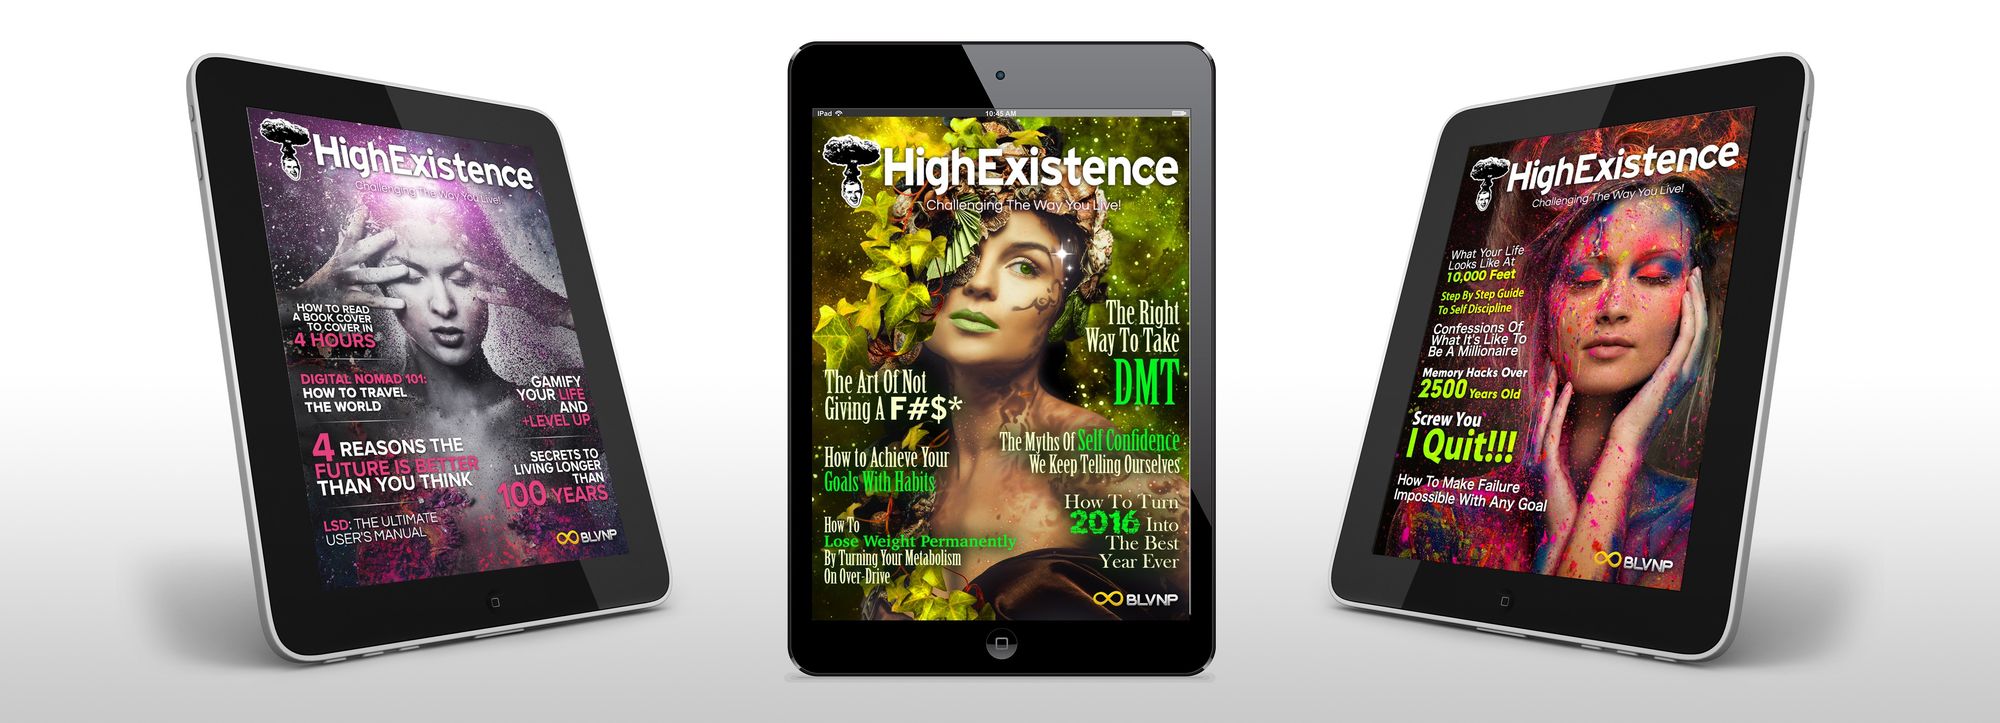 HighExistence magazine